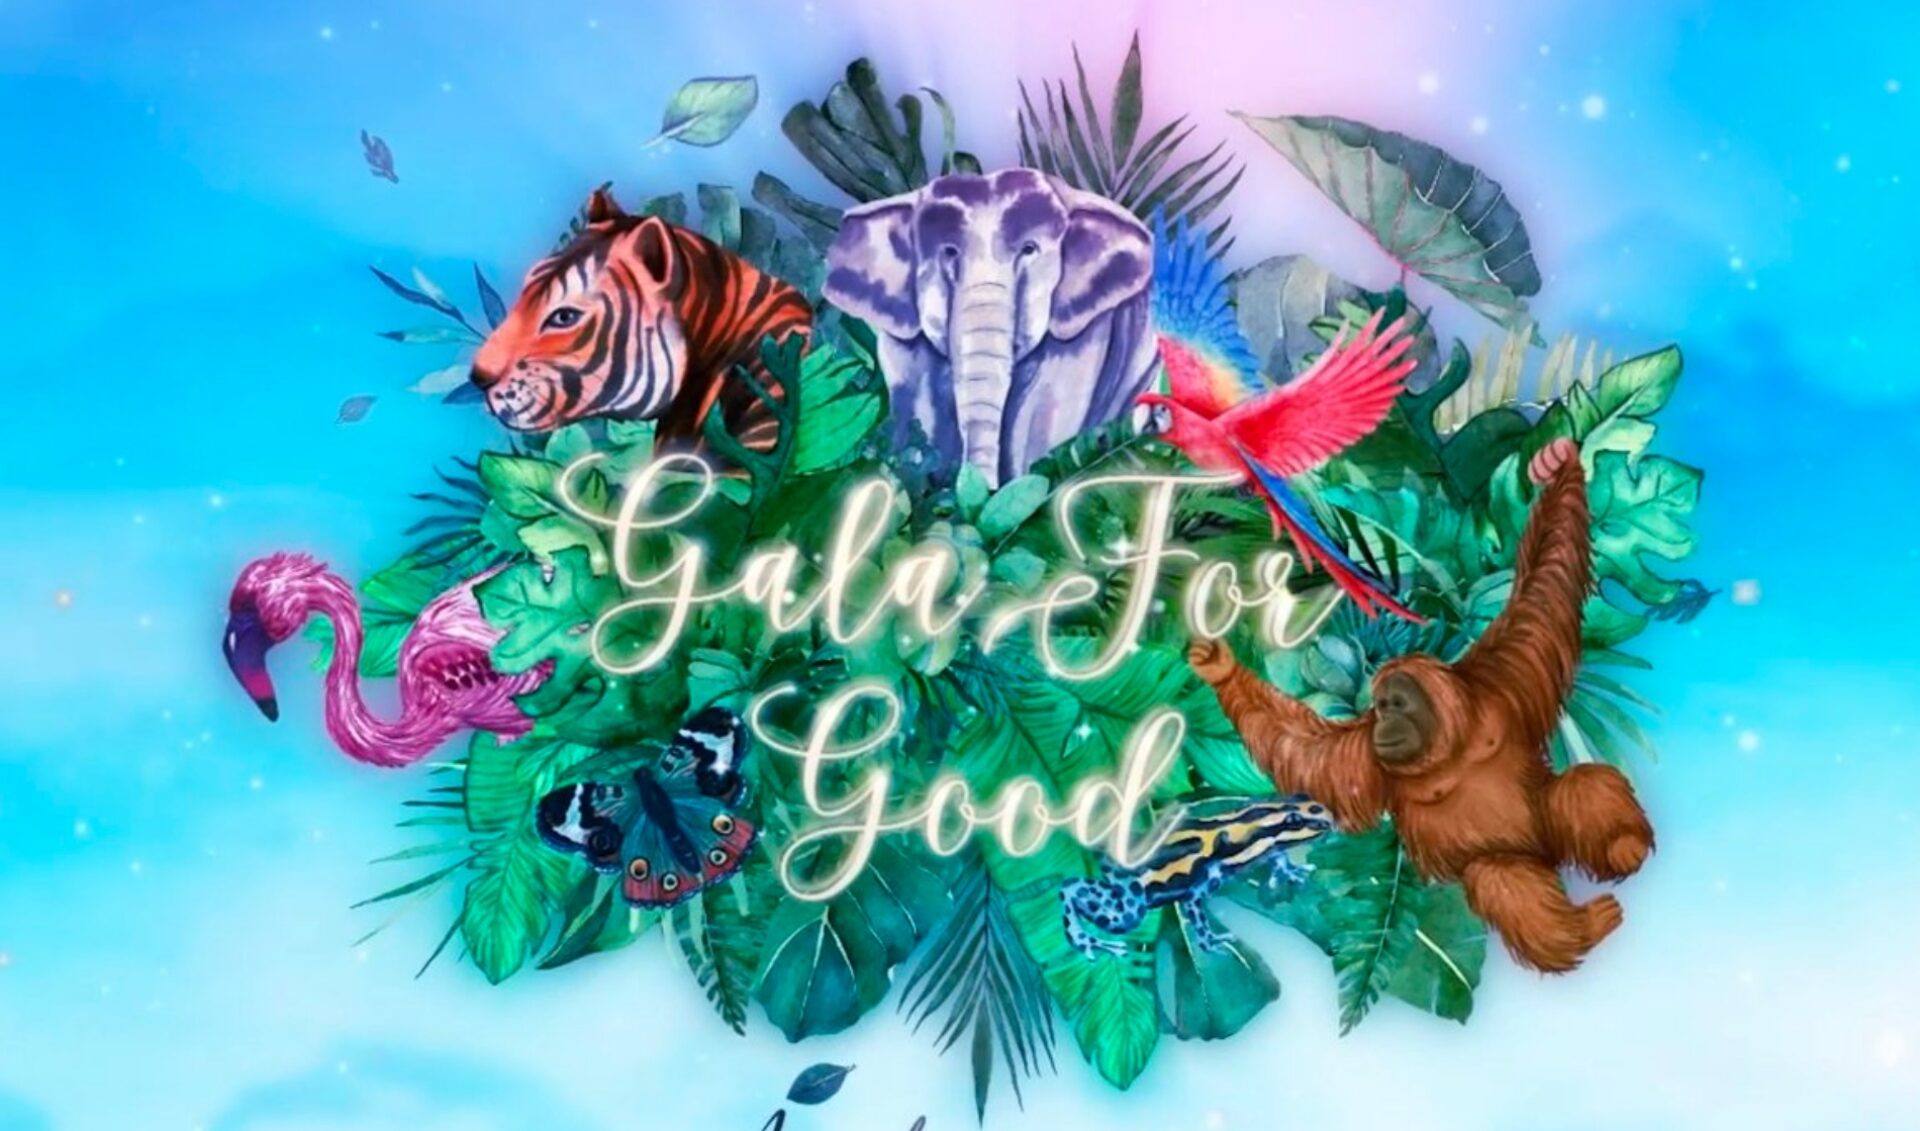 QTCinderella, Maya Higa’s Gala For Good raises “around $250,000” for rainforest conservation